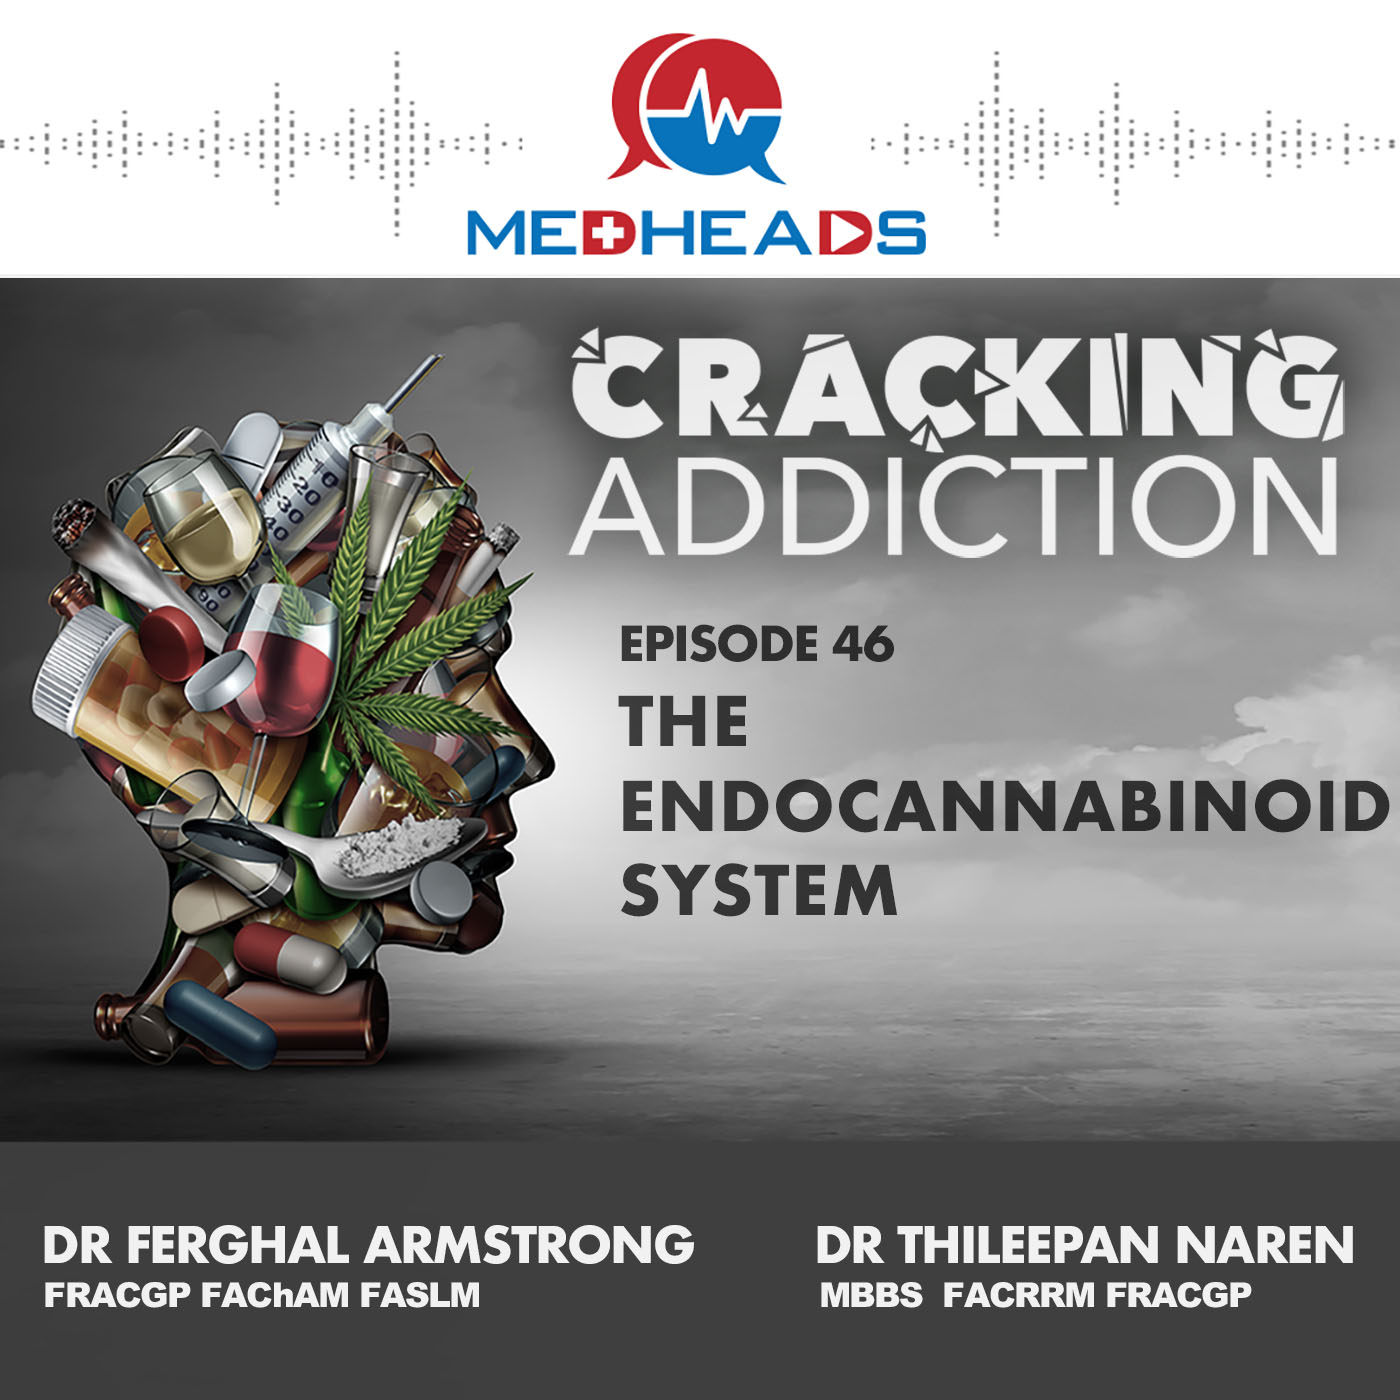 Artwork for podcast Cracking Addiction